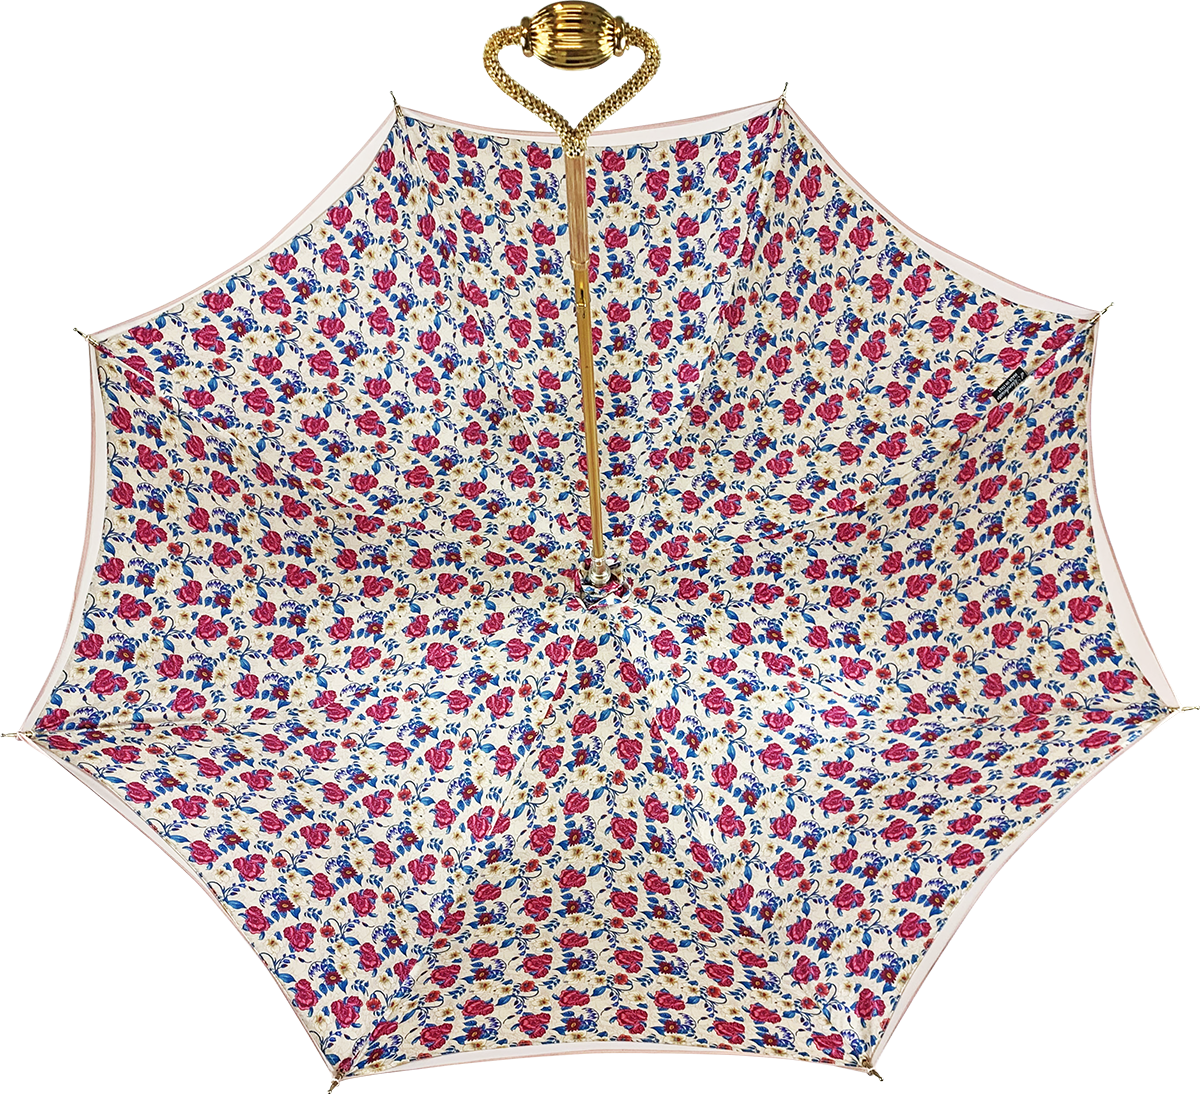 Romantic Umbrella with Heart handle